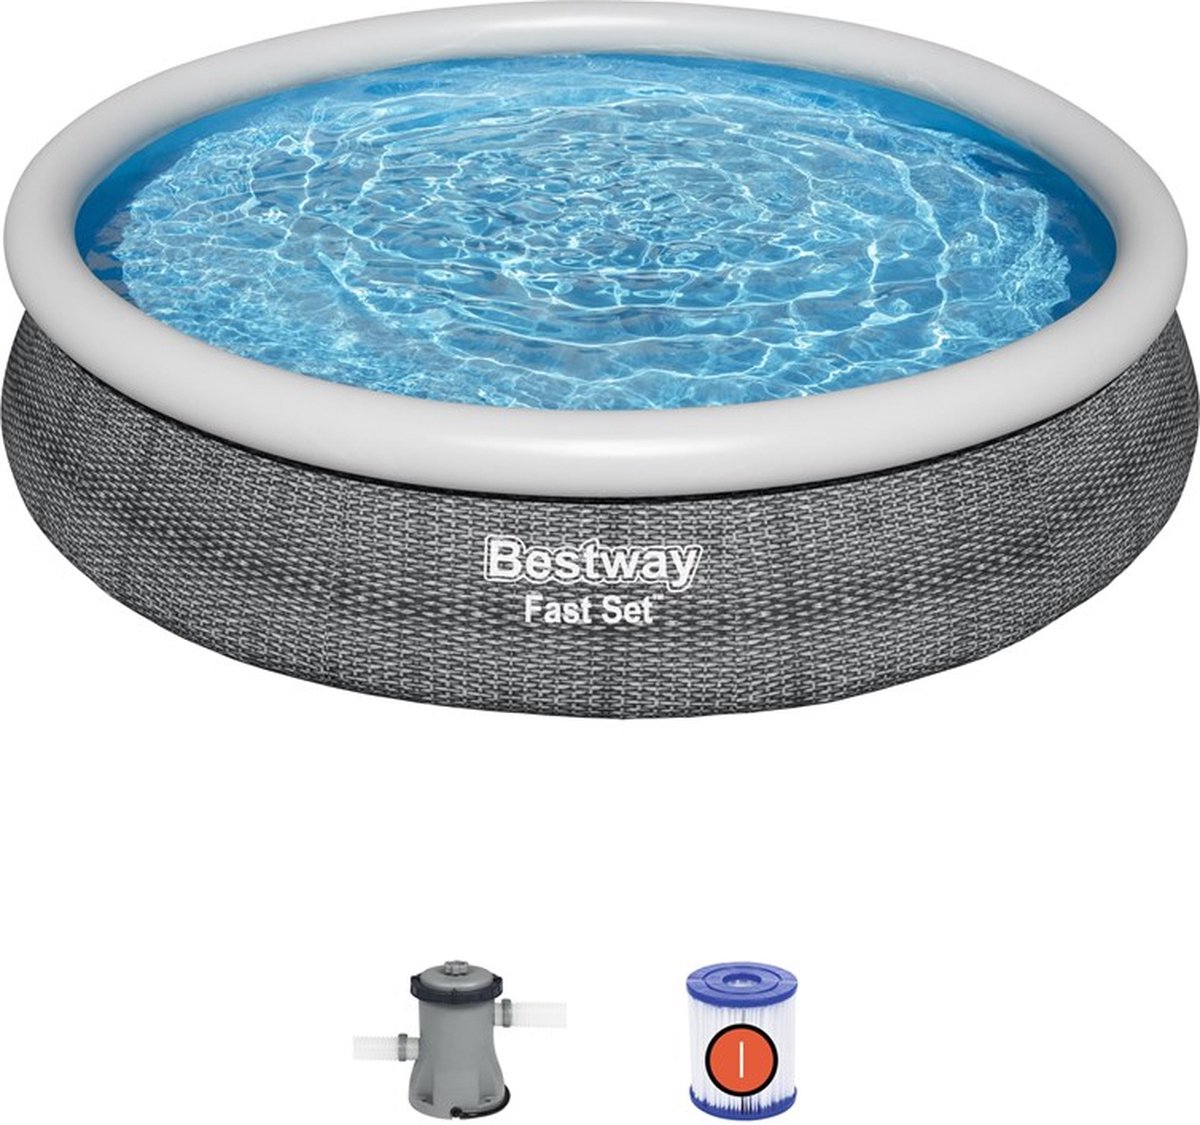 Bestway - Fast Set - Opblaasbaar zwembad inclusief filterpomp - 366x76 cm - Rattanprint - Rond - Bestway